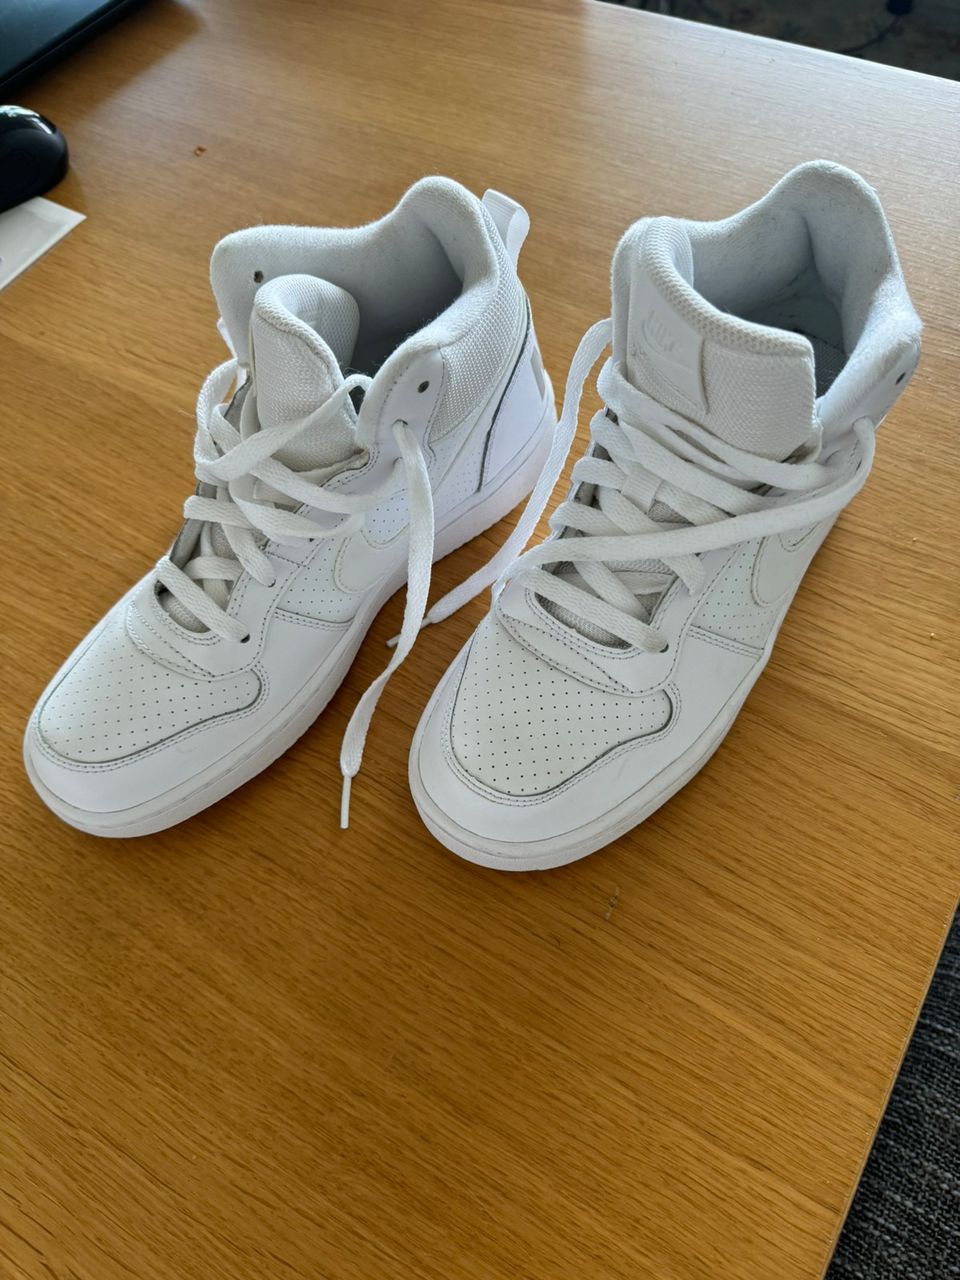 white Nike shoes